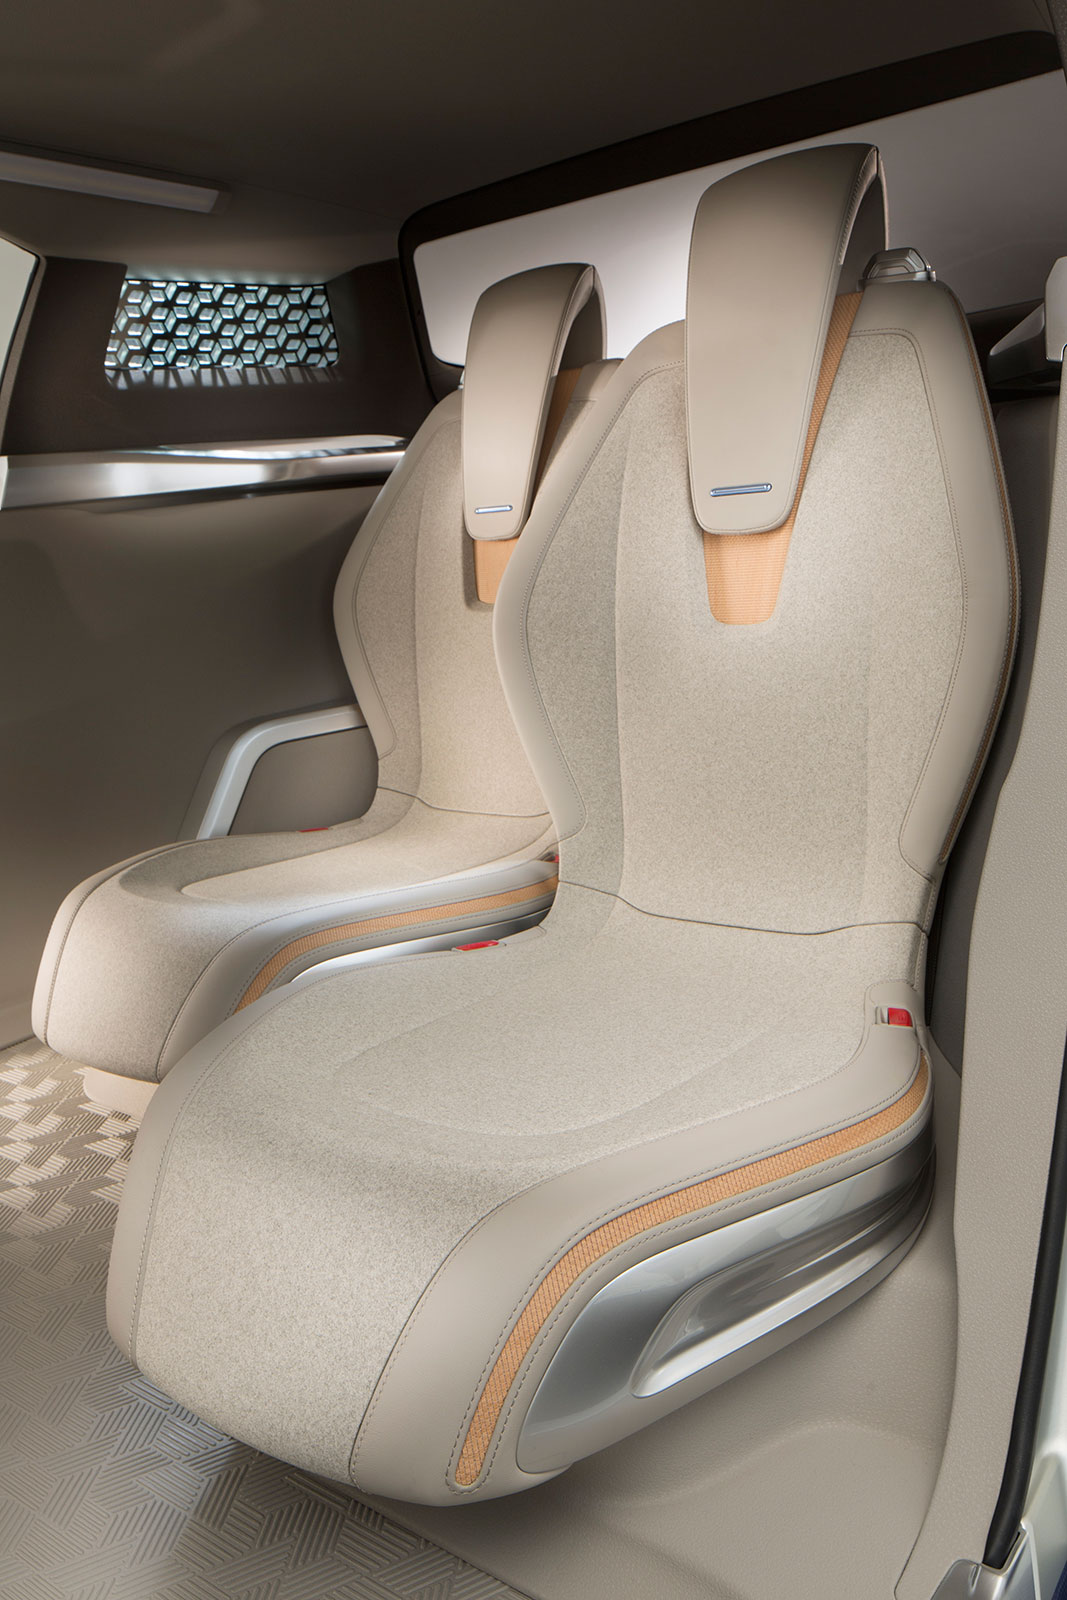 Nissan TeRRA, 2012 - Interior - Rear Seats 